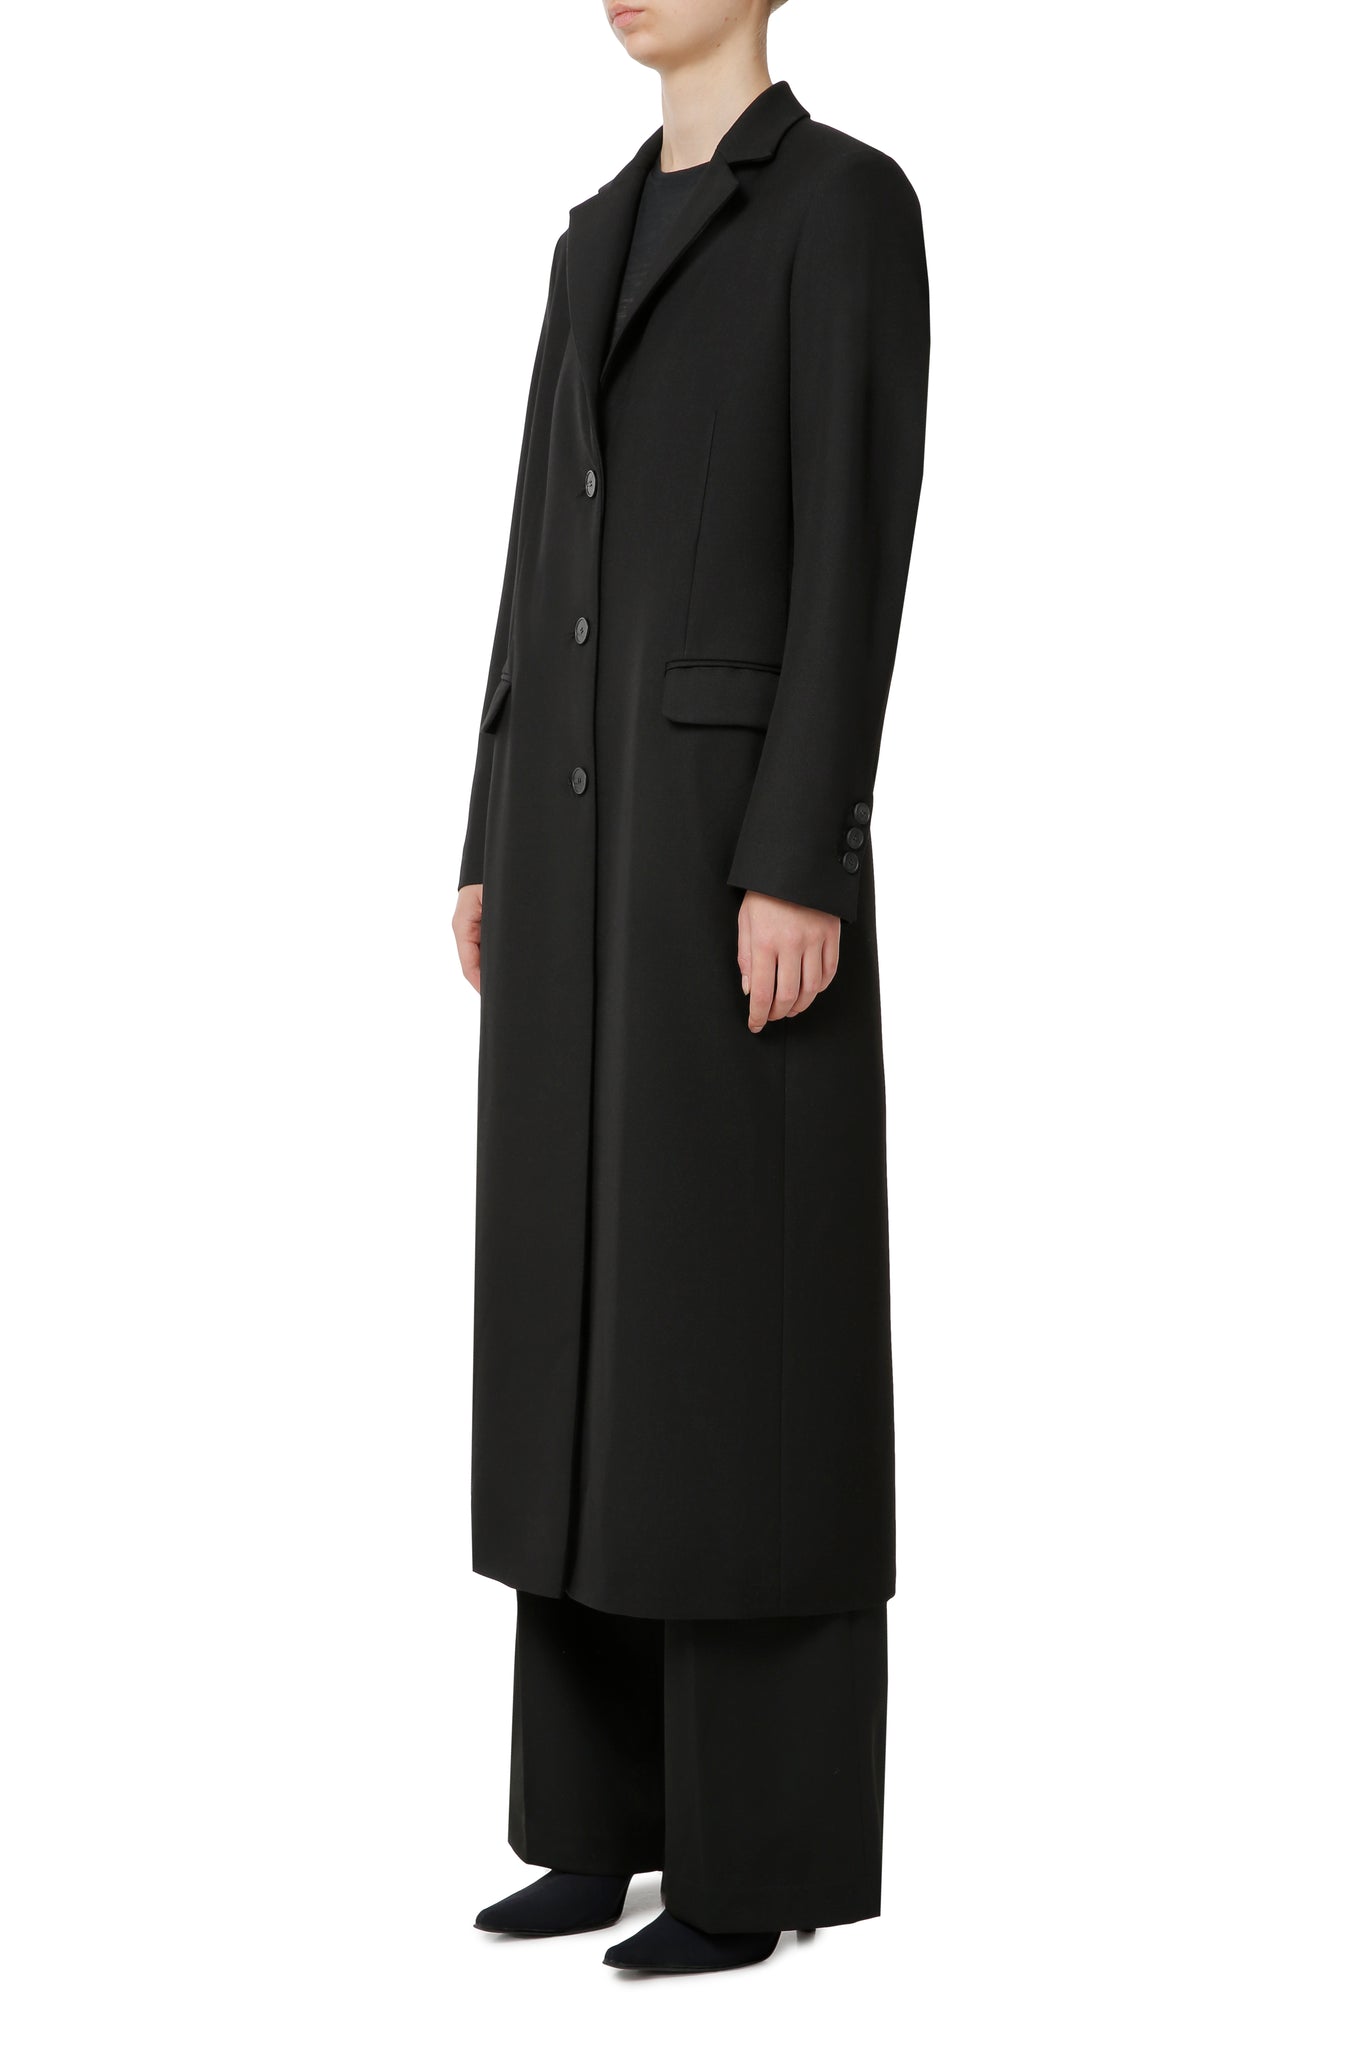 Black jacket/coat